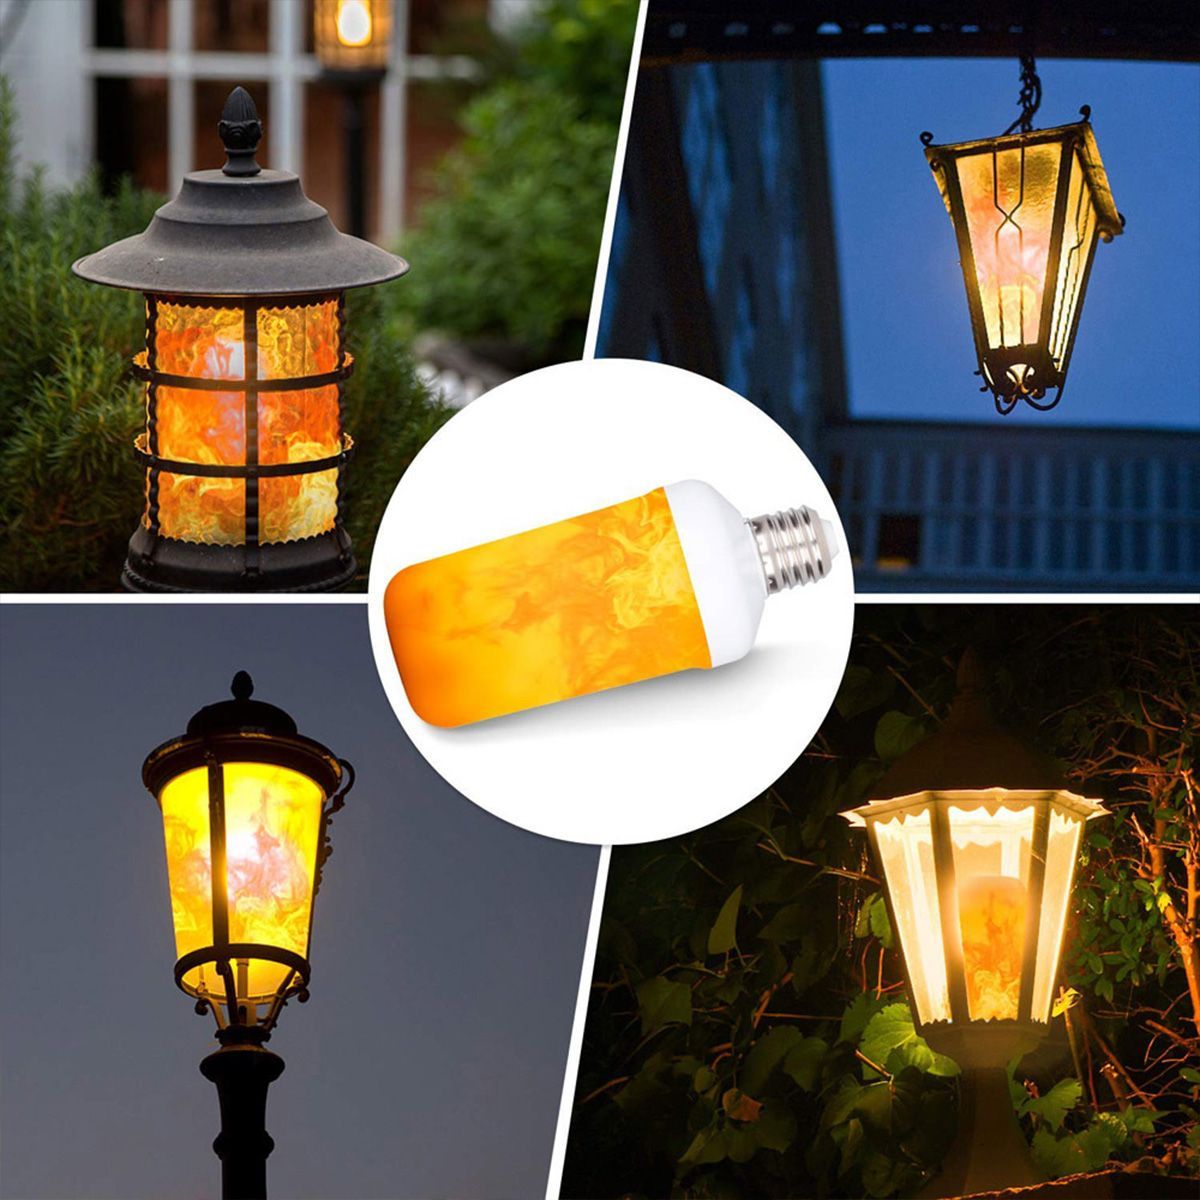 E27-3W-LED-Flame-Effect-Fire-Light-Bulb-Gravity-Sensor-Lamp-Party-Home-Decoration-AC85-265V-1713675